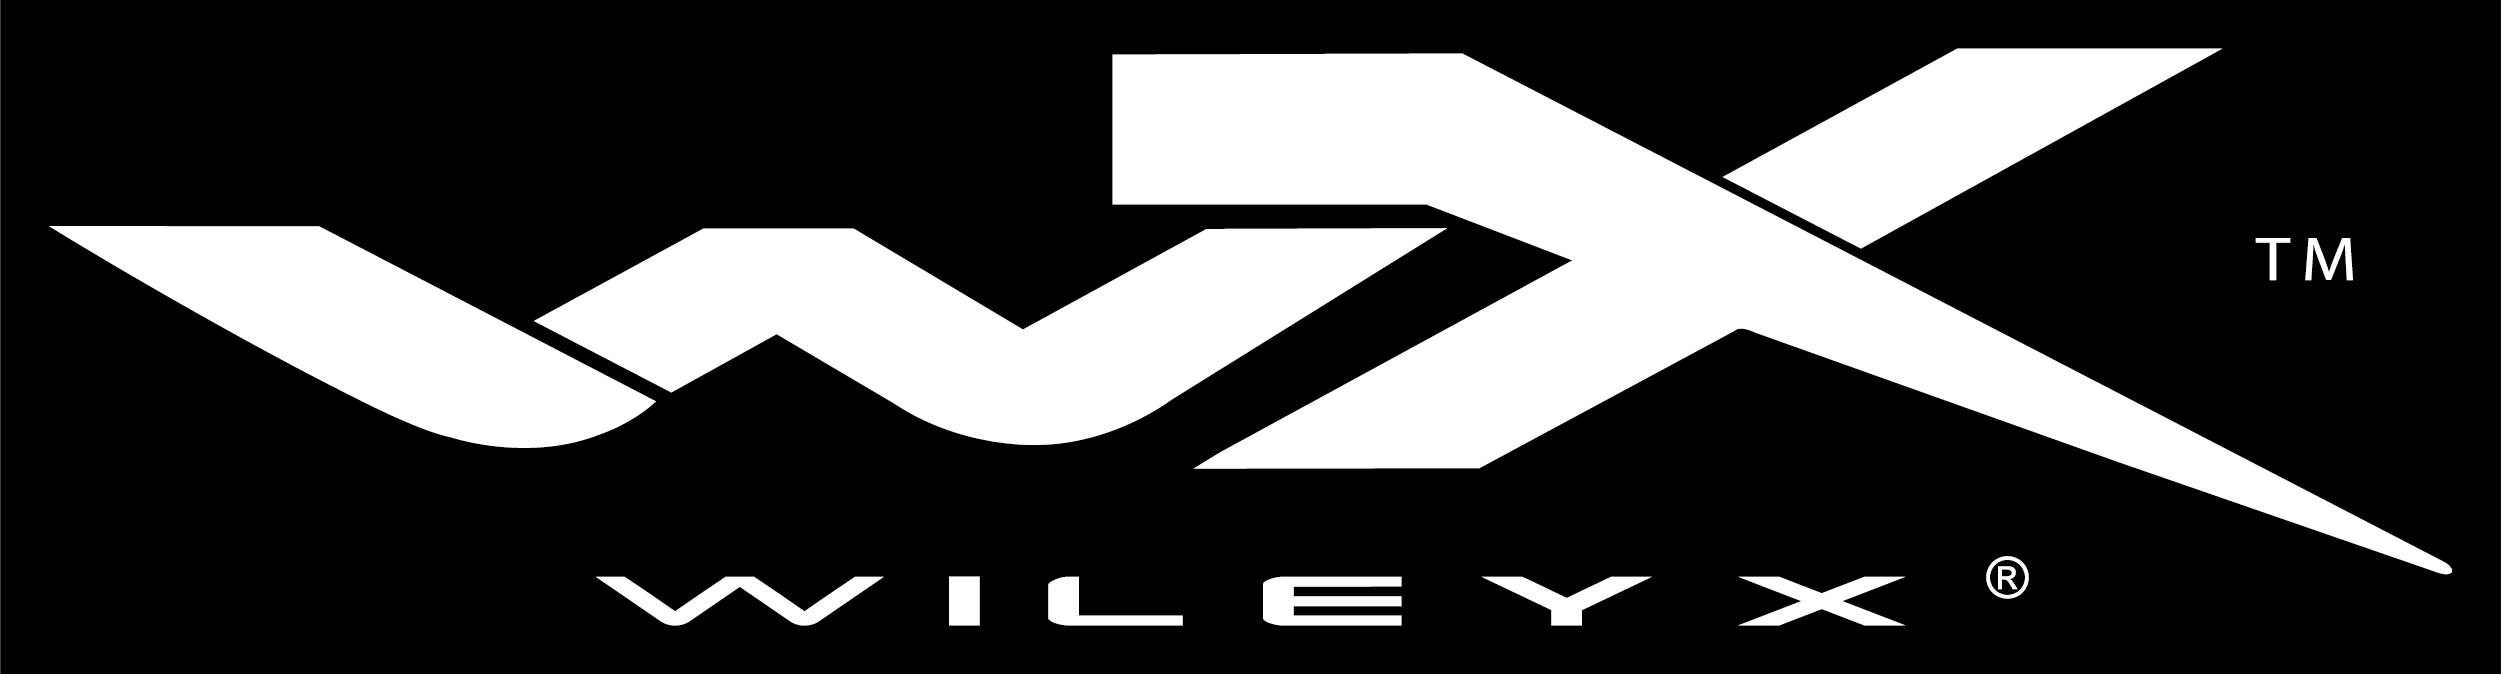 W an X Logo - Wiley X Logos X EMEA LLC